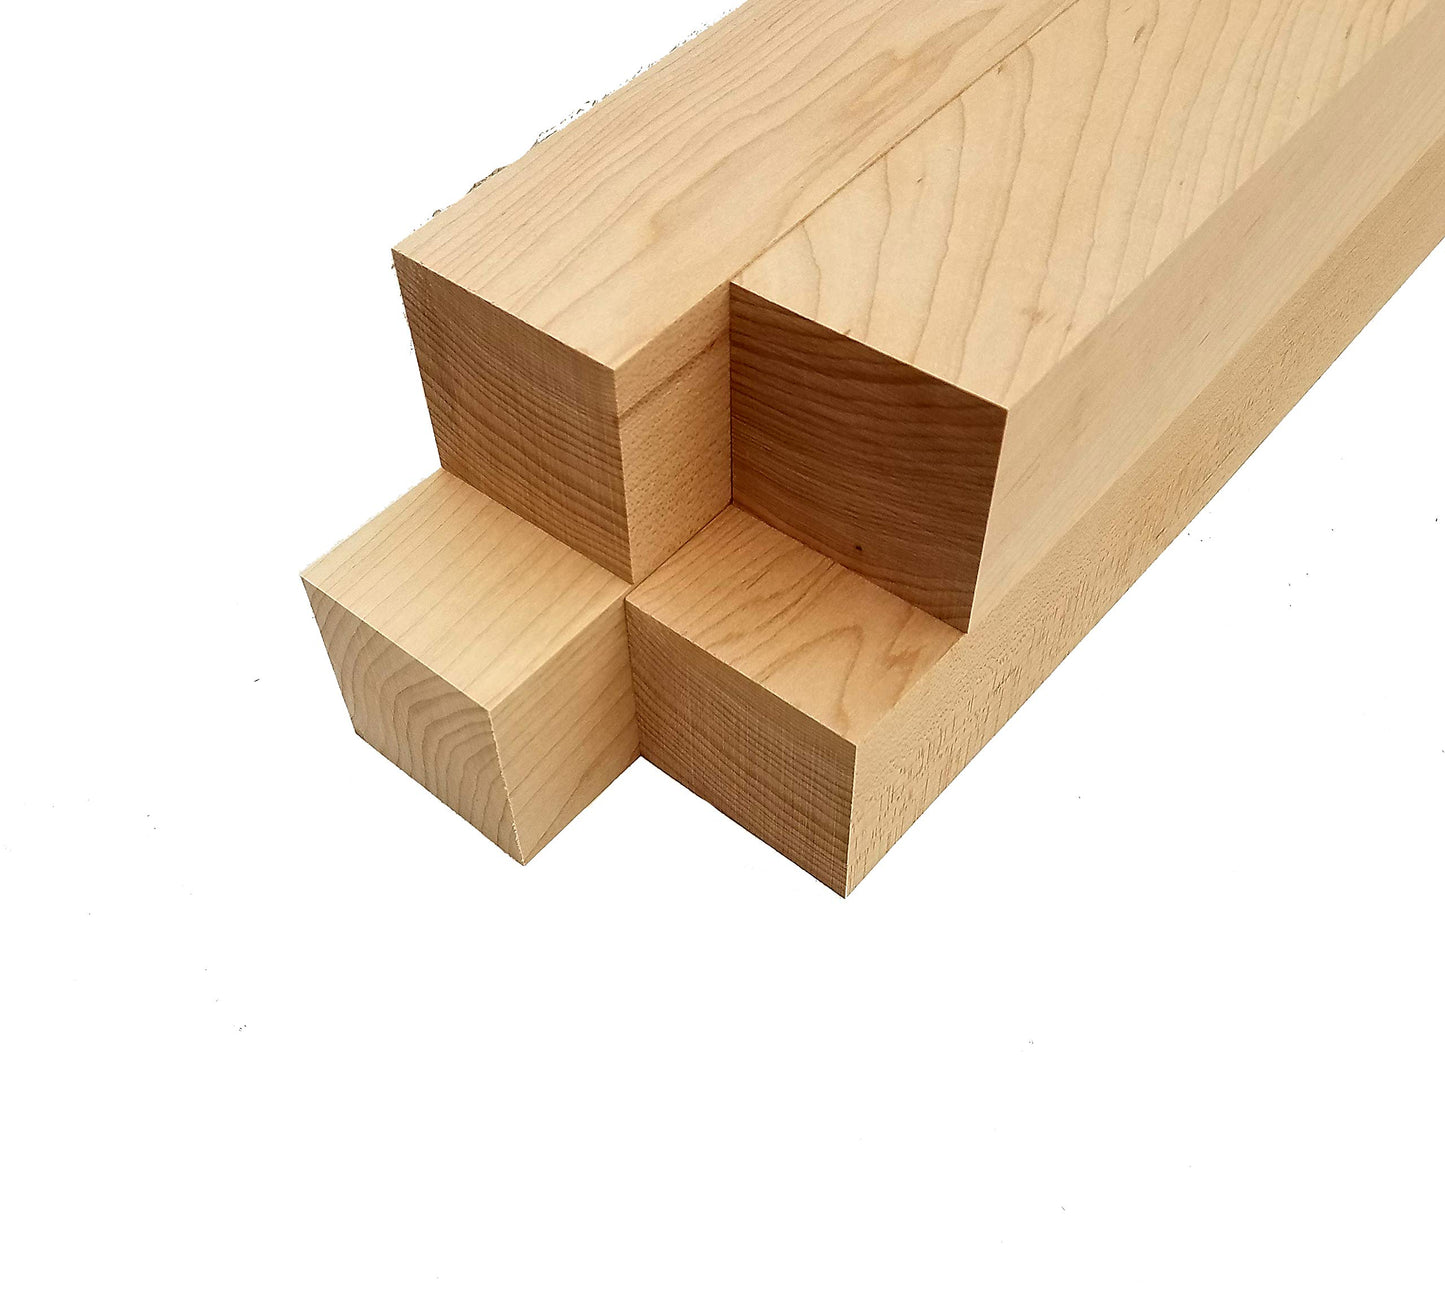 Hard Maple Lumber Turning Blank Squares - 2.5" x 2.5" x 8" (4 Pcs)